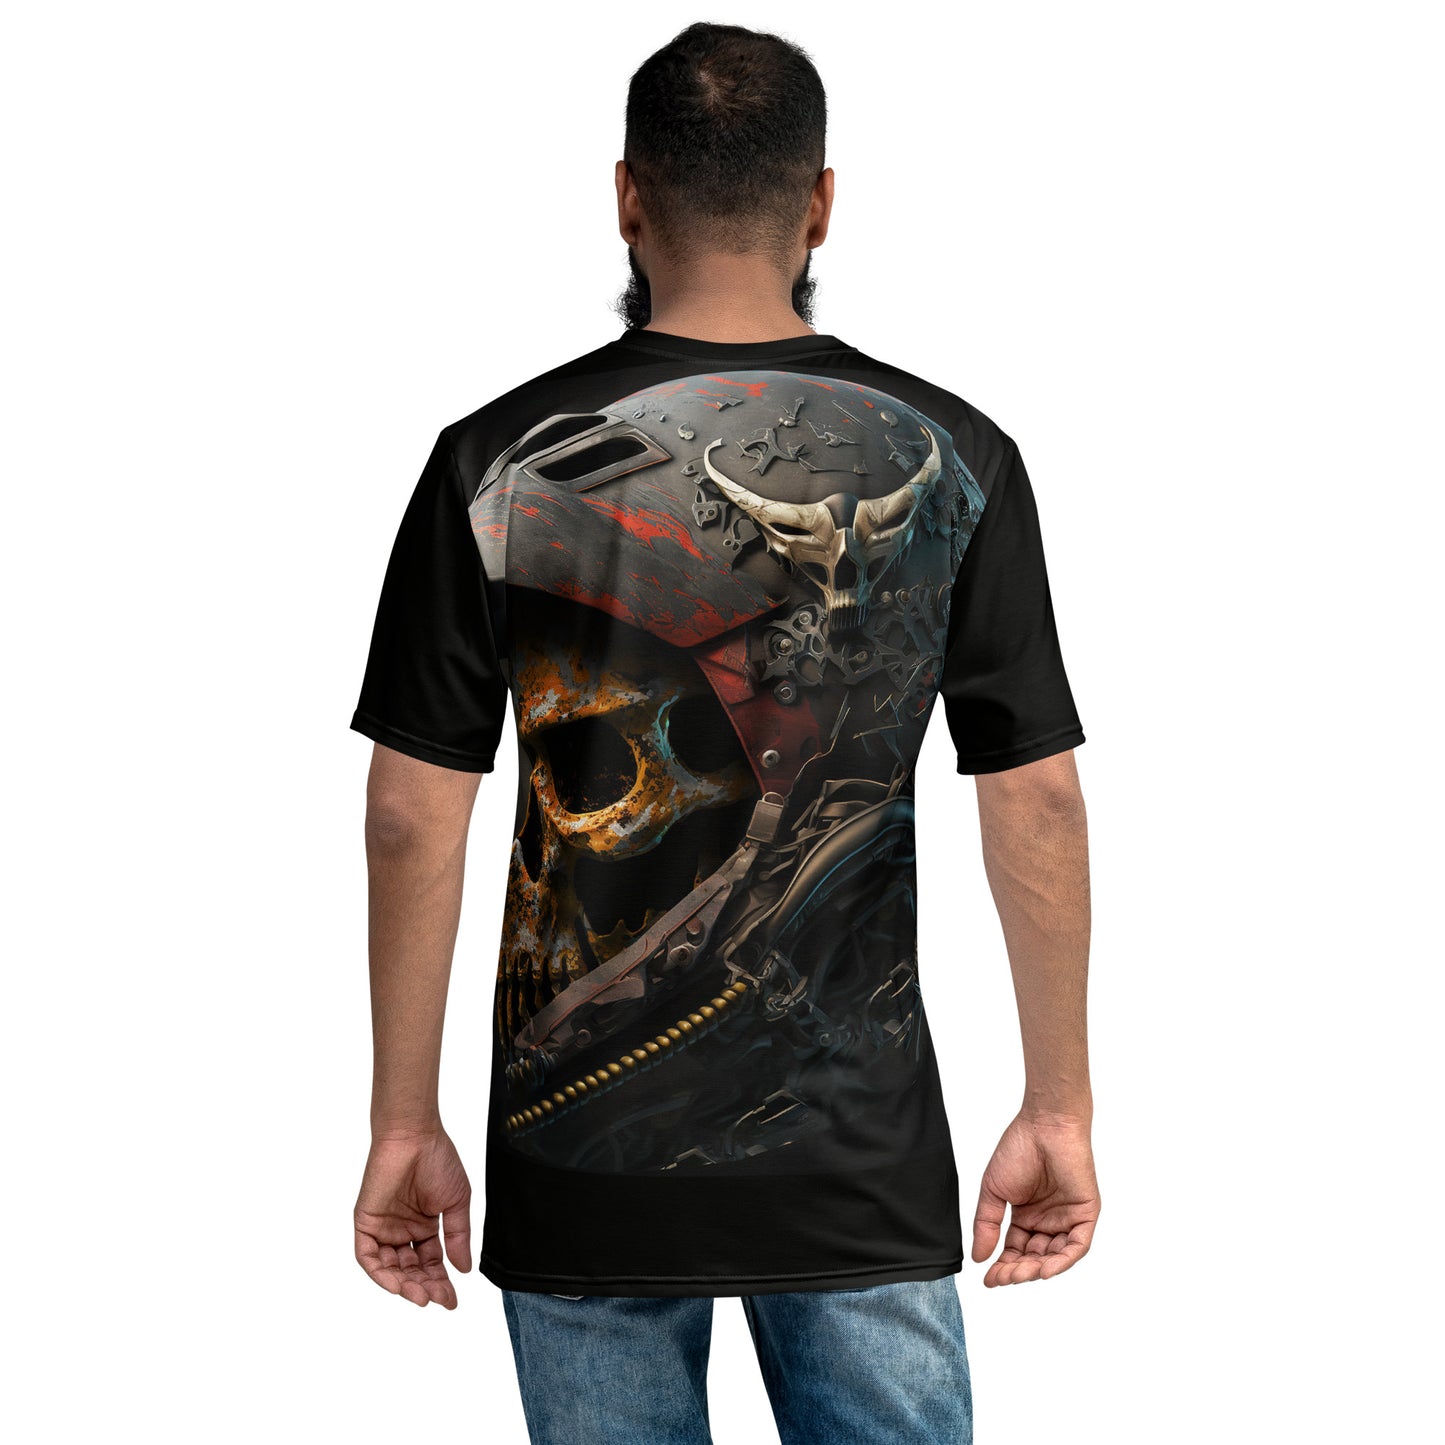 Motocross Skull T-shirt